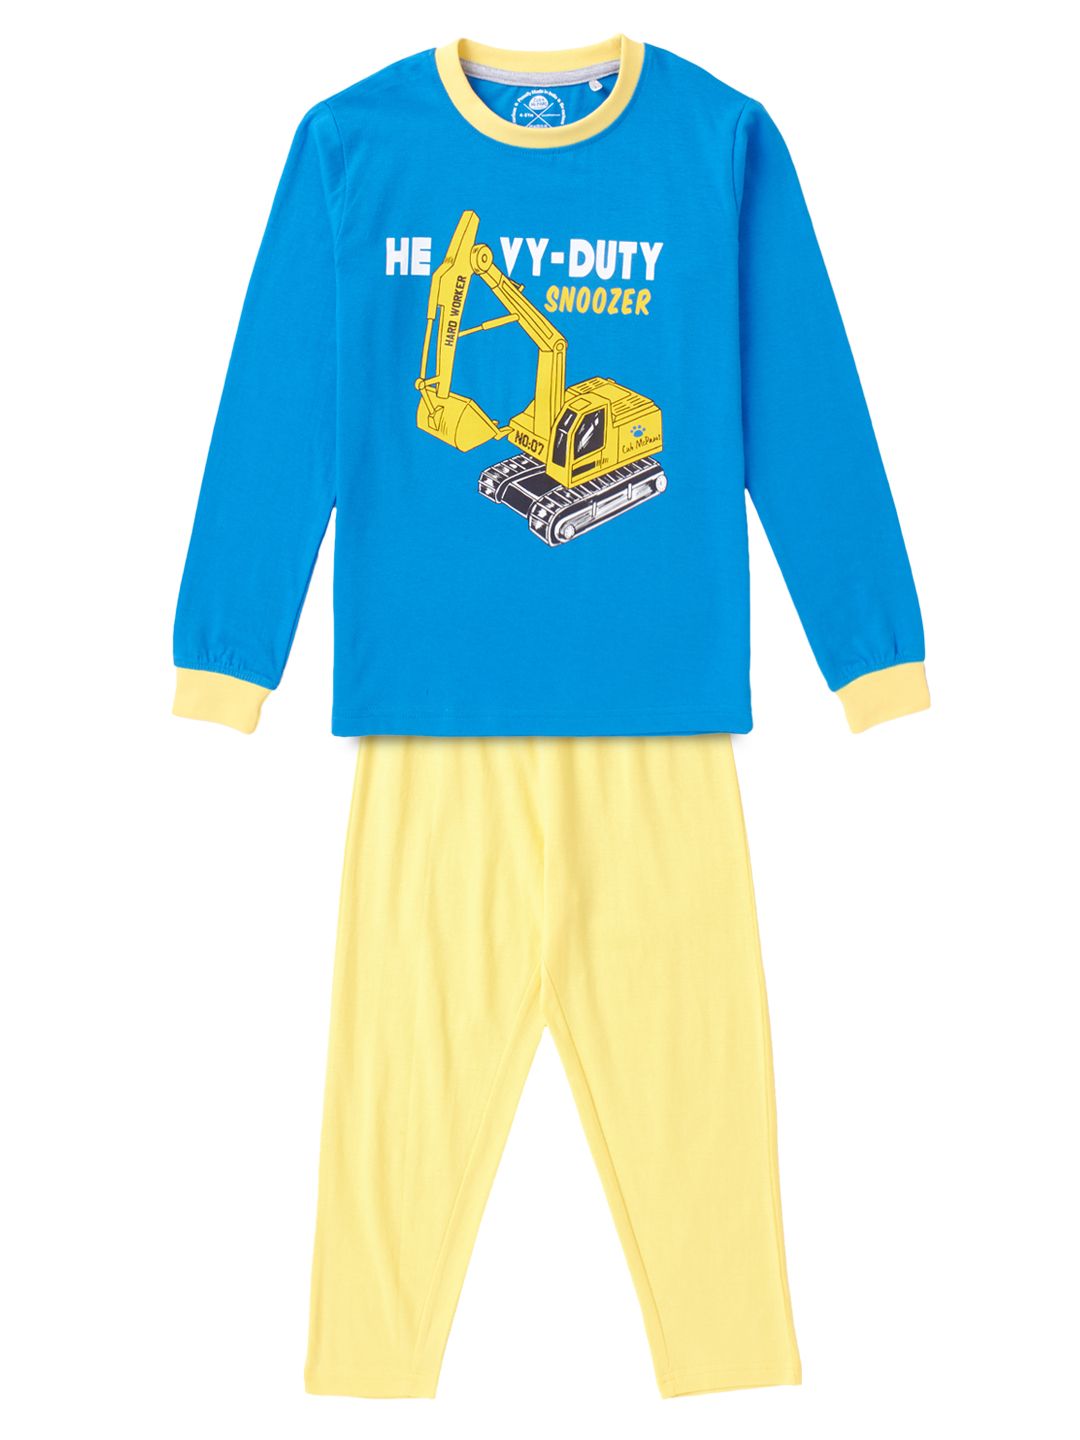 Boys Sleepwear Set - Blue & Yellow